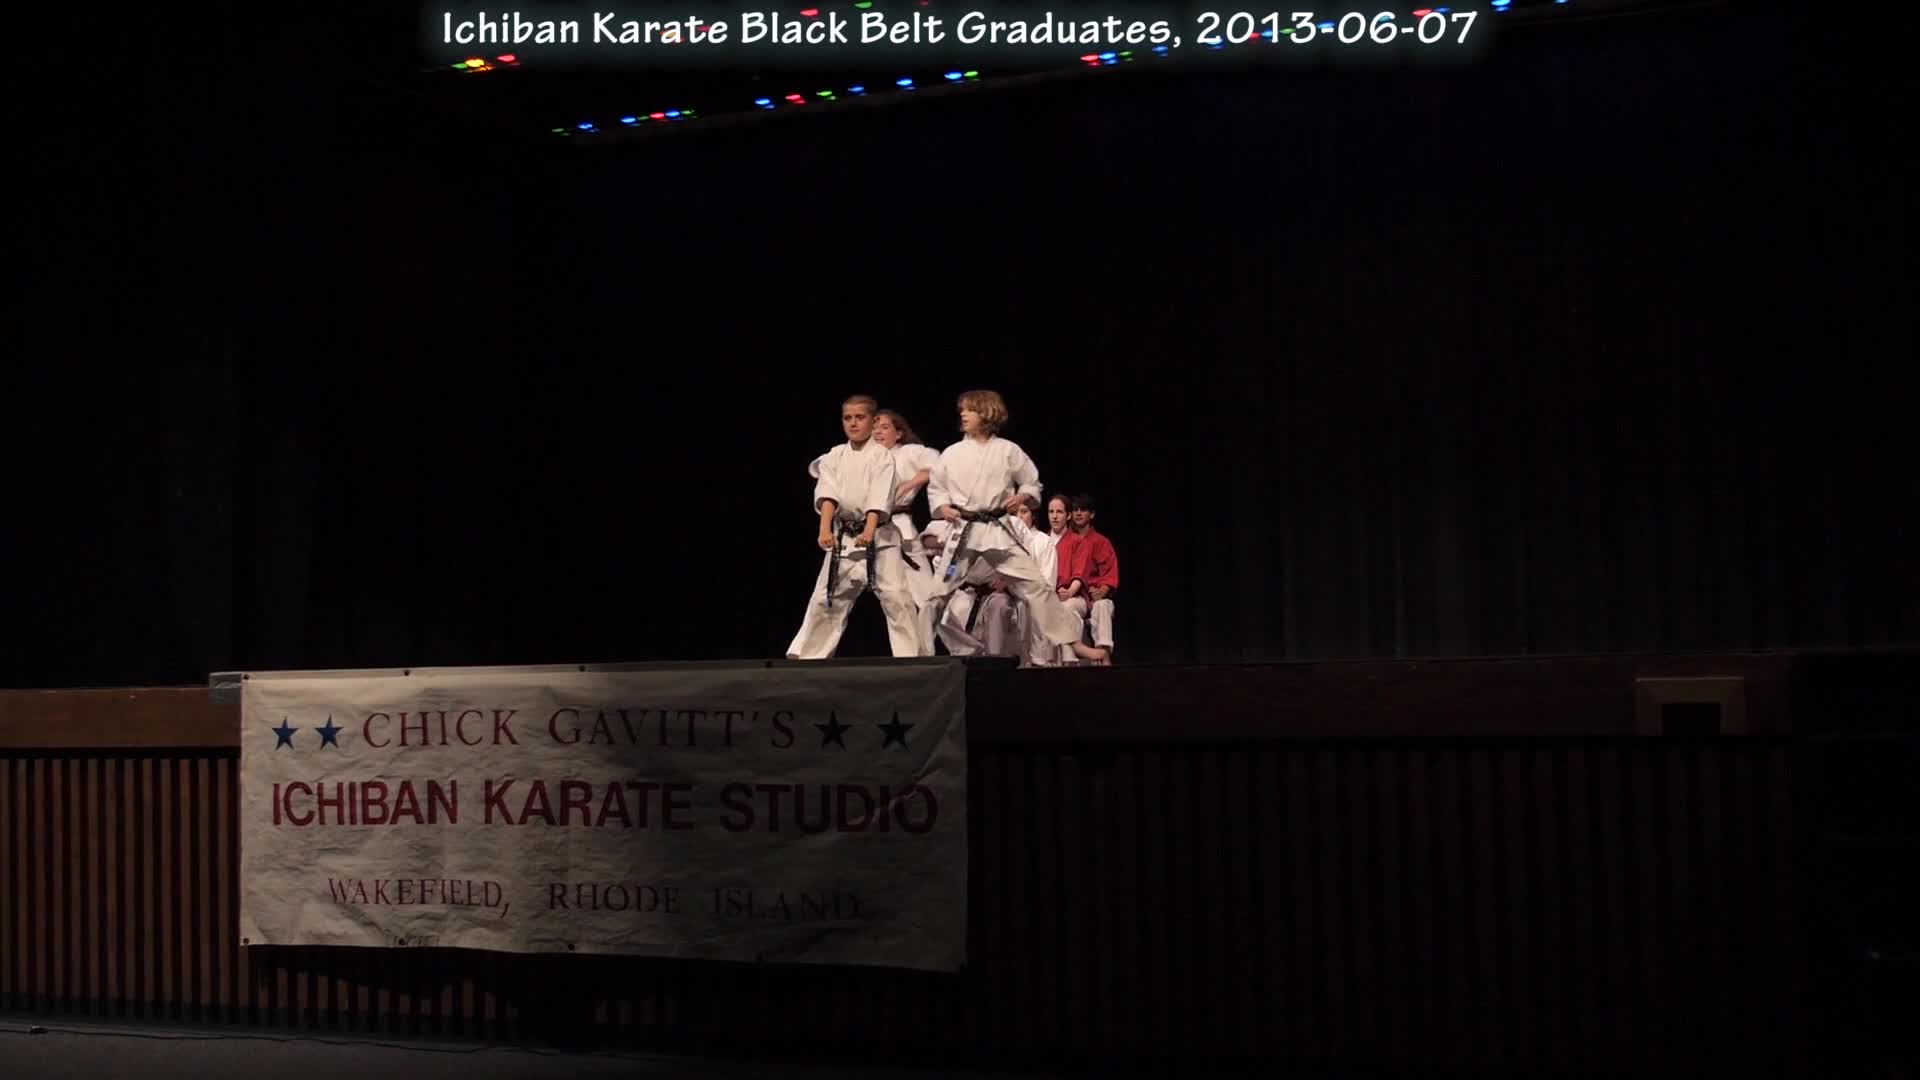 The Graduating Black Belt Students